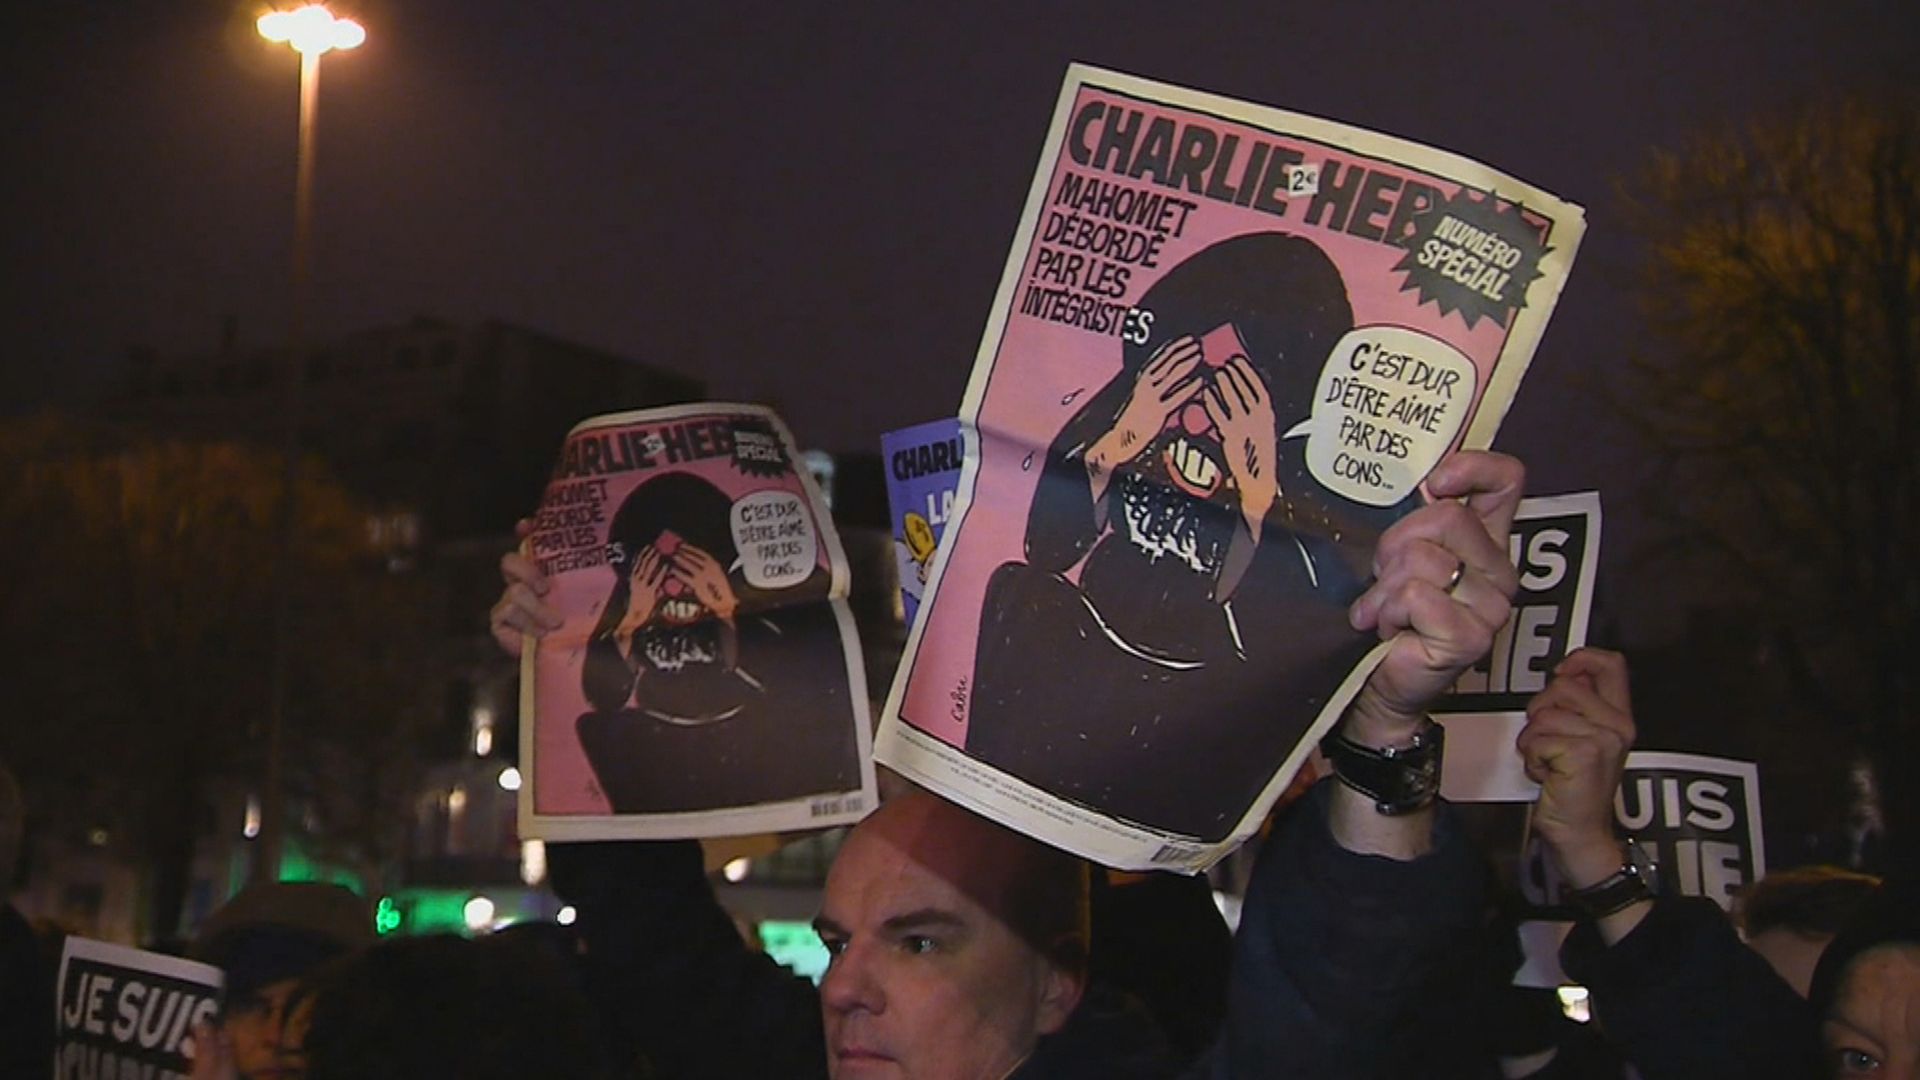 Charlie Hebdo: Paris Under Attack